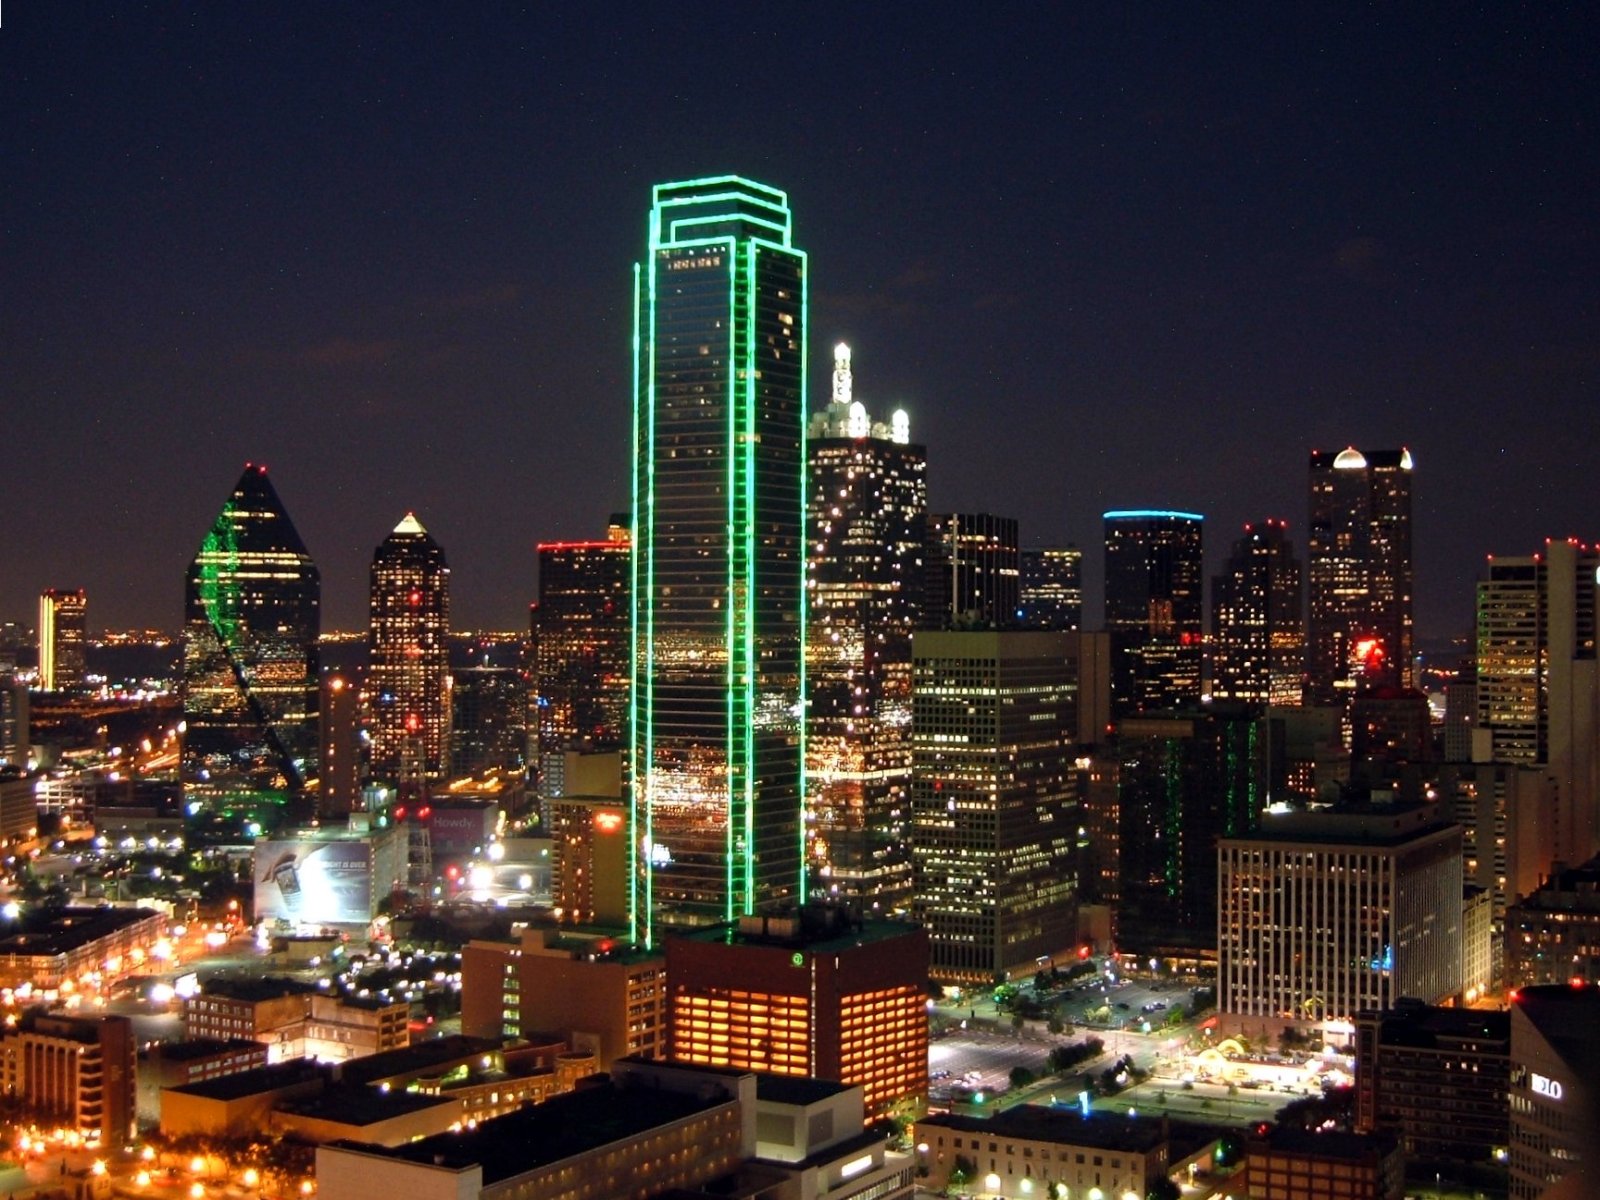 Dallas City | Dallas City Wallpapers | Pinterest | Dallas city, City ...